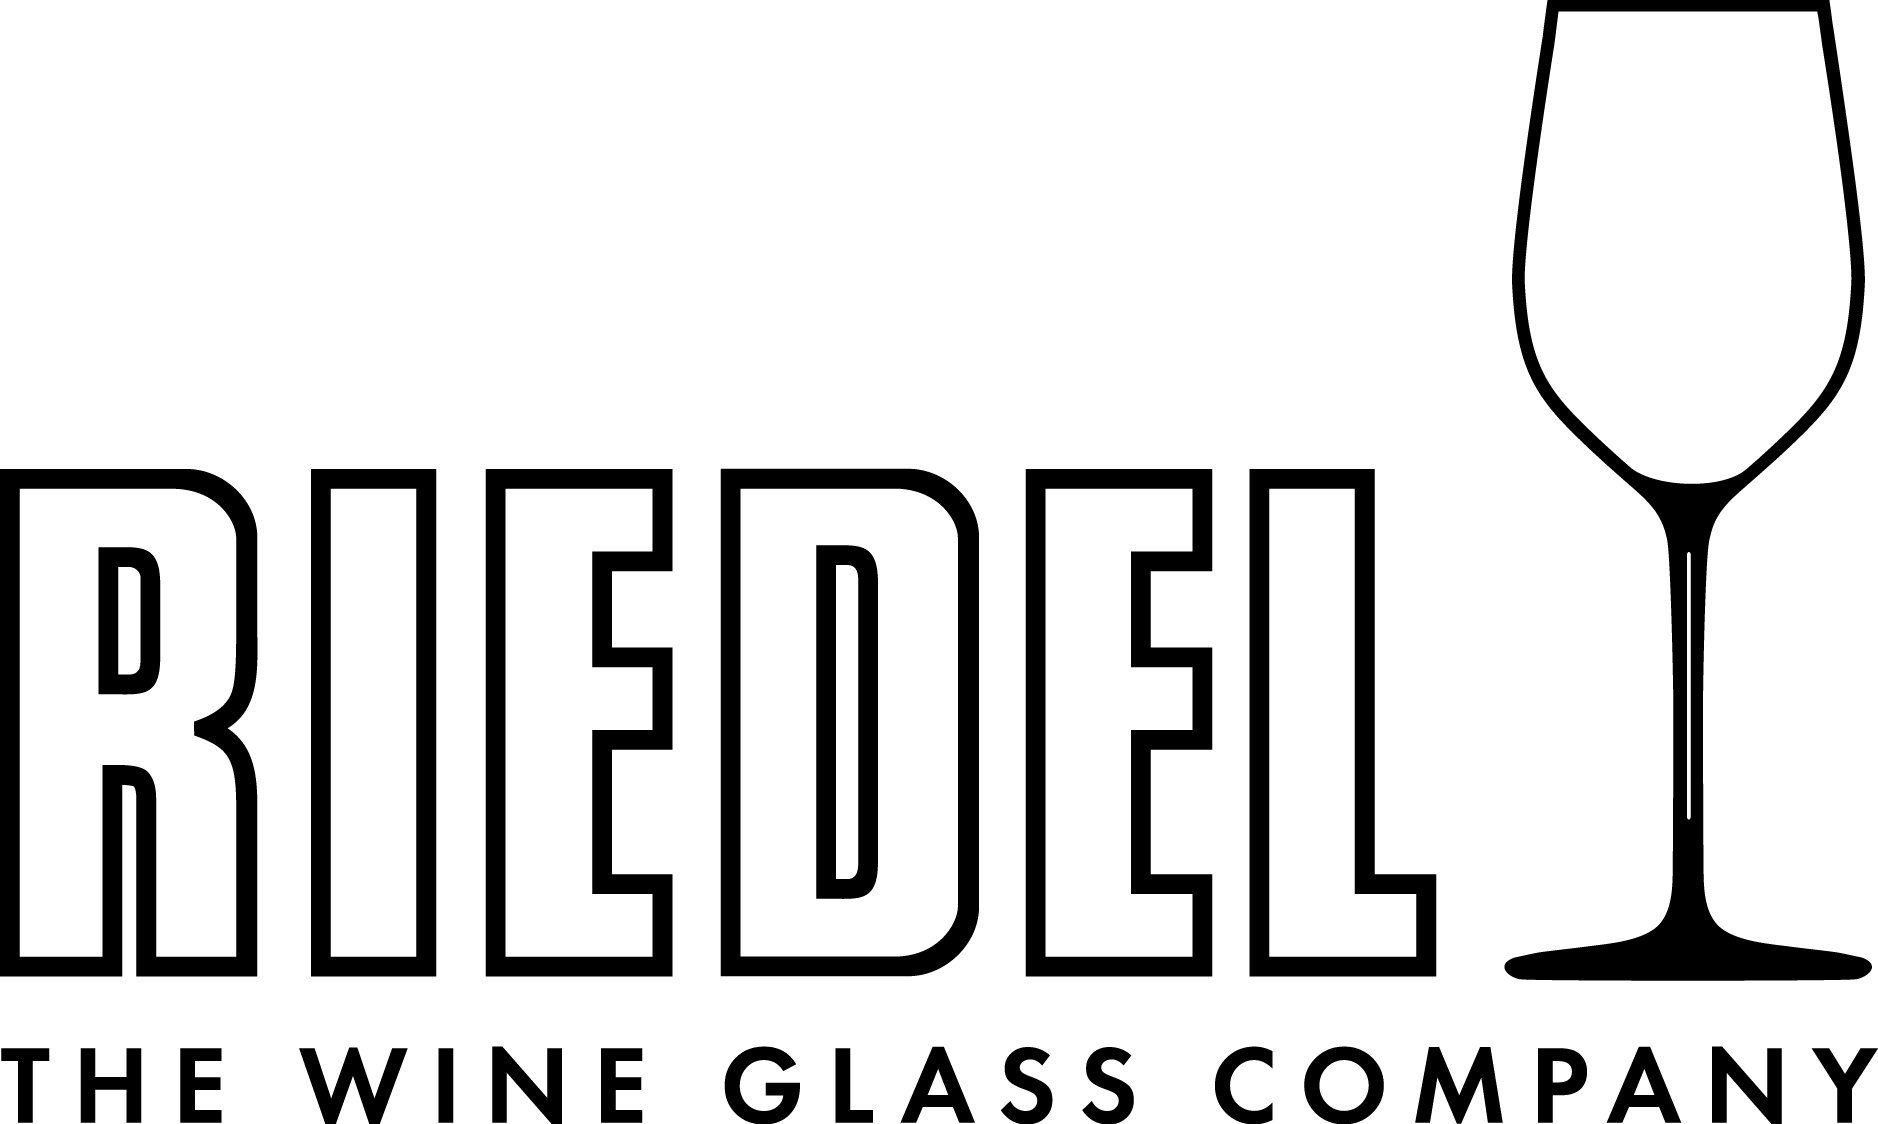 RIEDEL THE WINE GLASS COMPANY